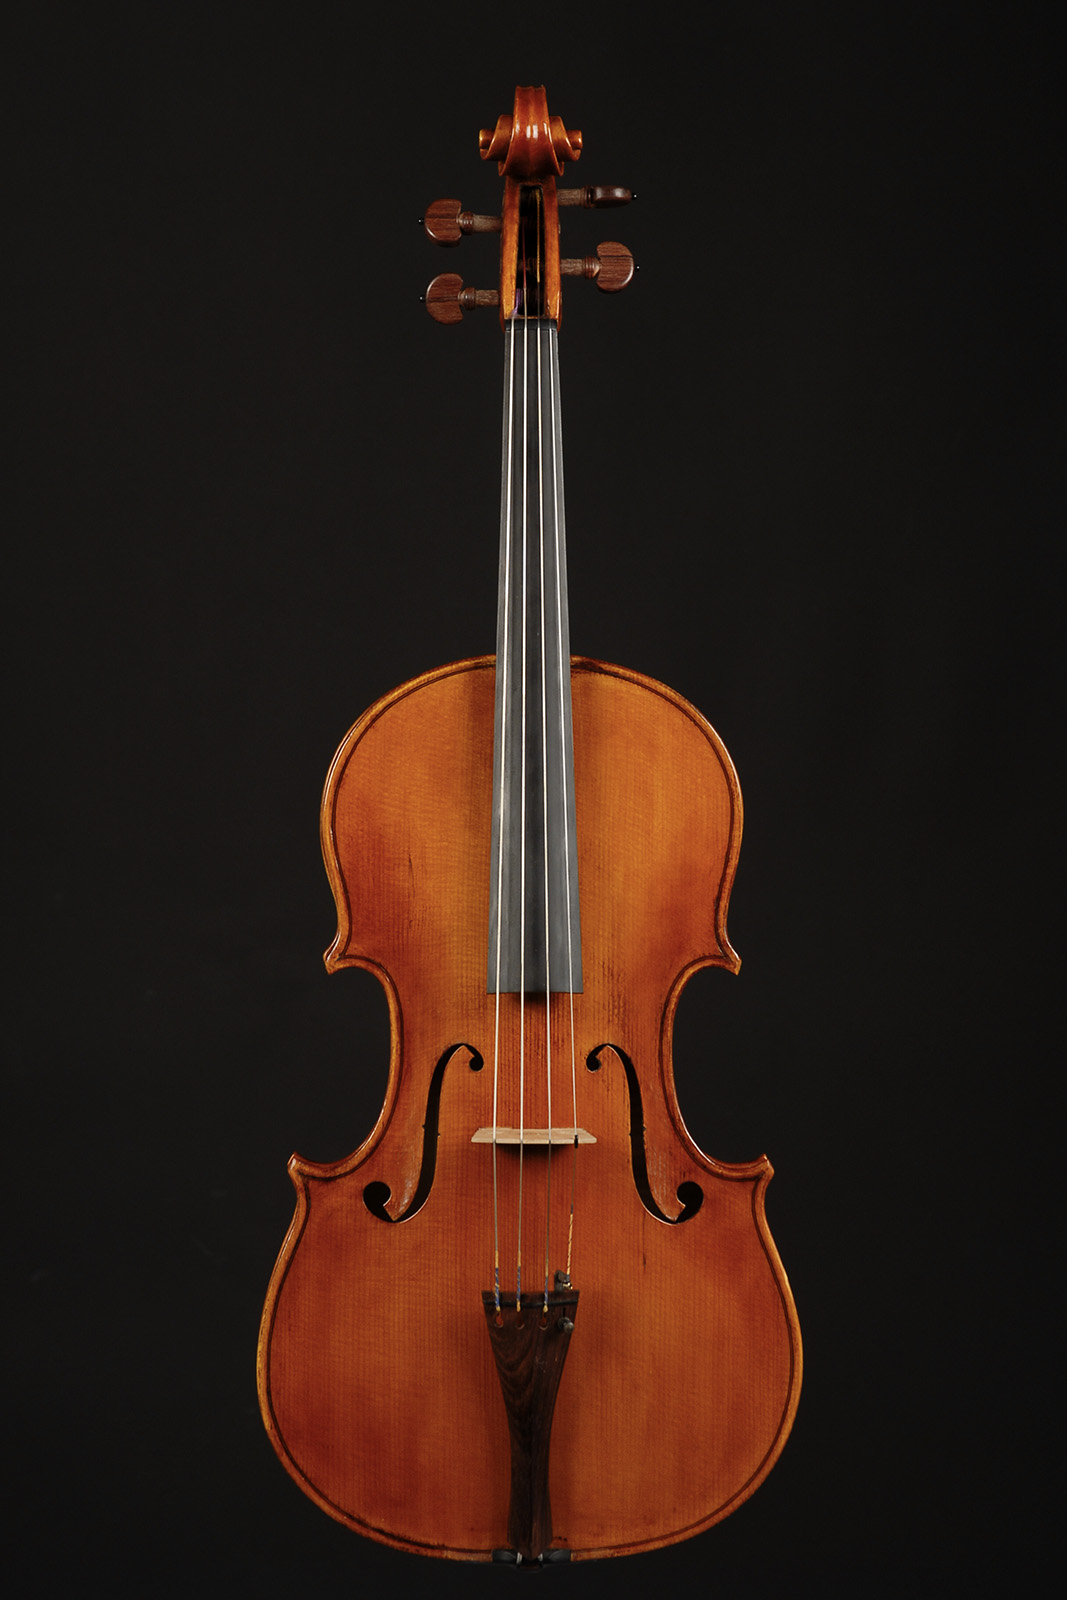 Antonio Stradivari Cremona 1672 “Anemone“ cm 42 - Image 1